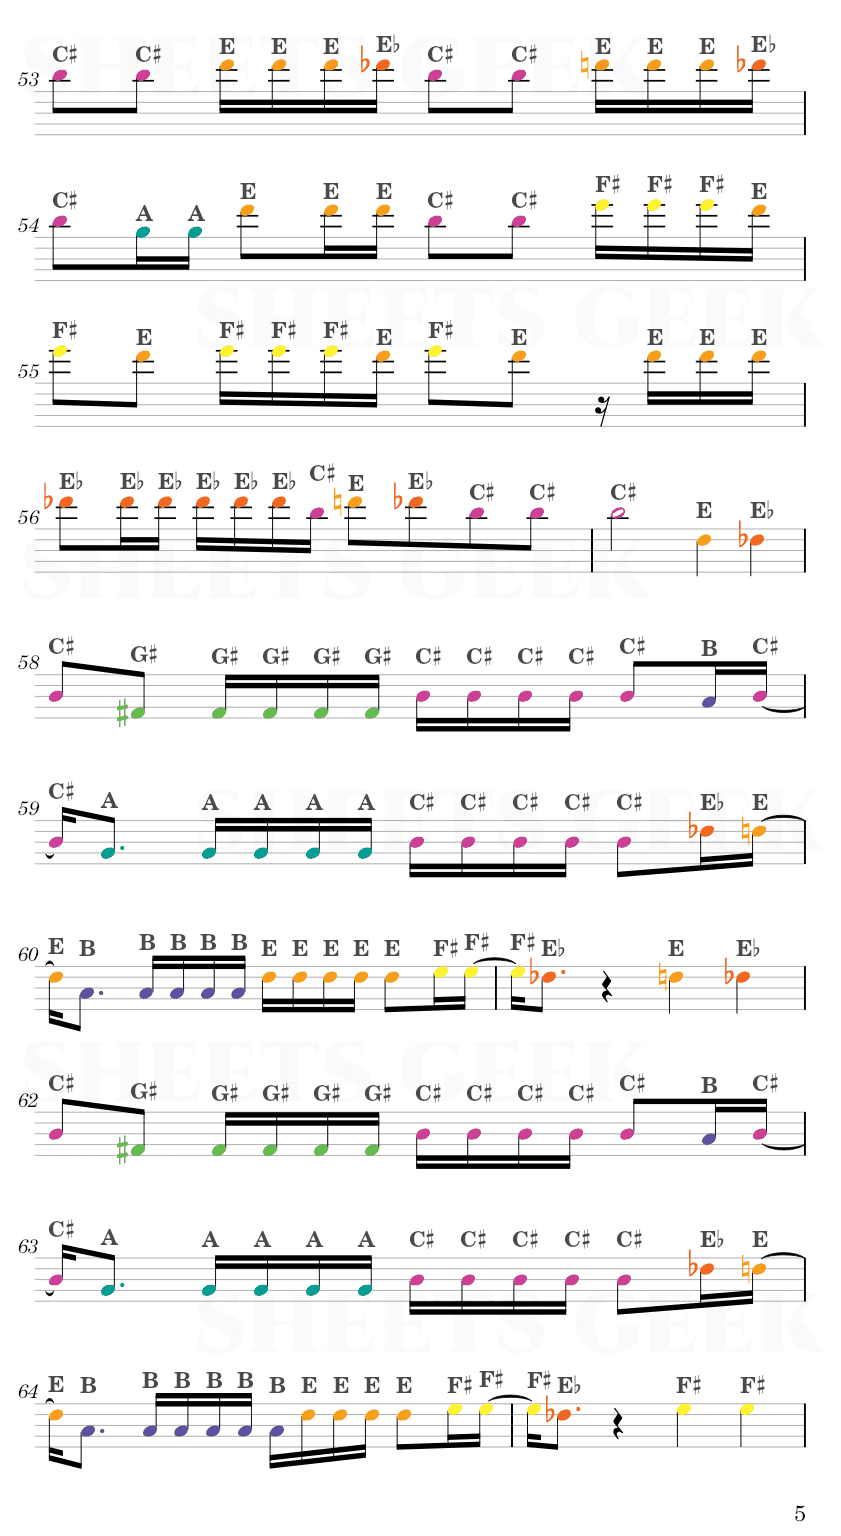 Despacito - Luis Fonsi Easy Sheets Music Free for piano, keyboard, flute, violin, sax, celllo 5